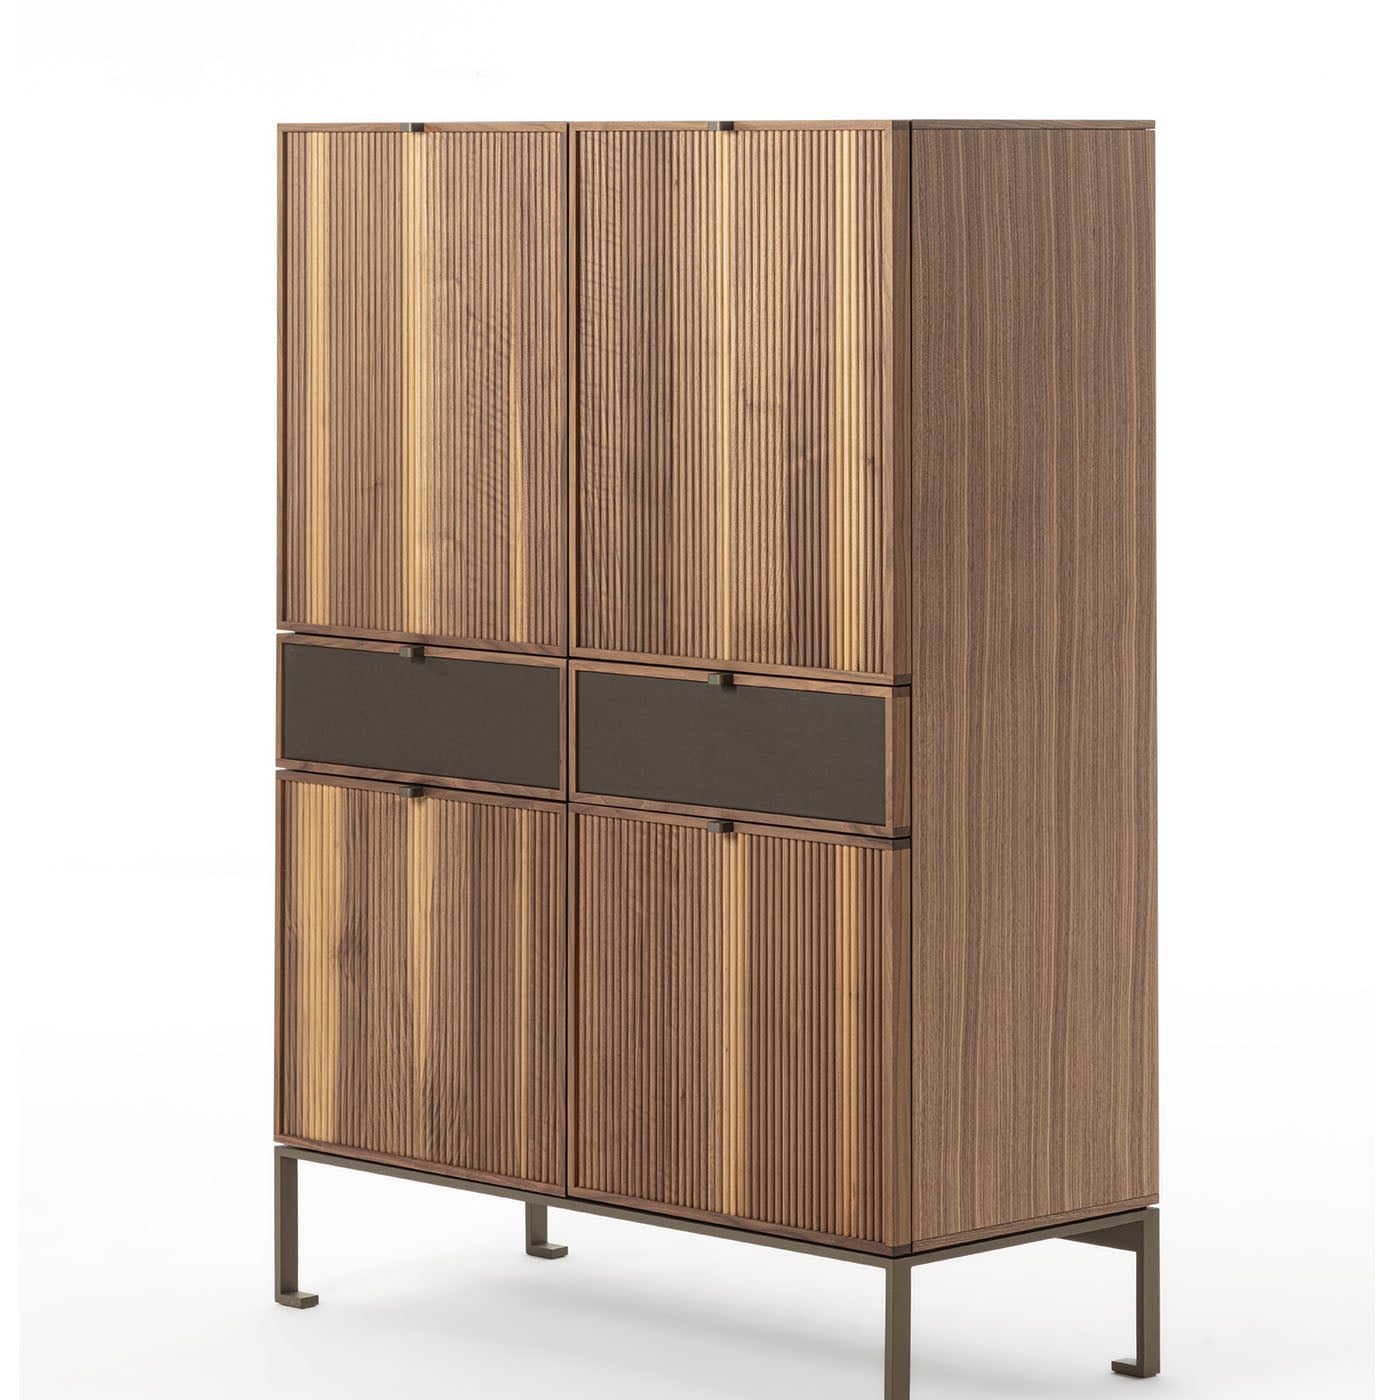 Melody L Canaletto Walnut Wood Storage Cabinet - Alternative view 1